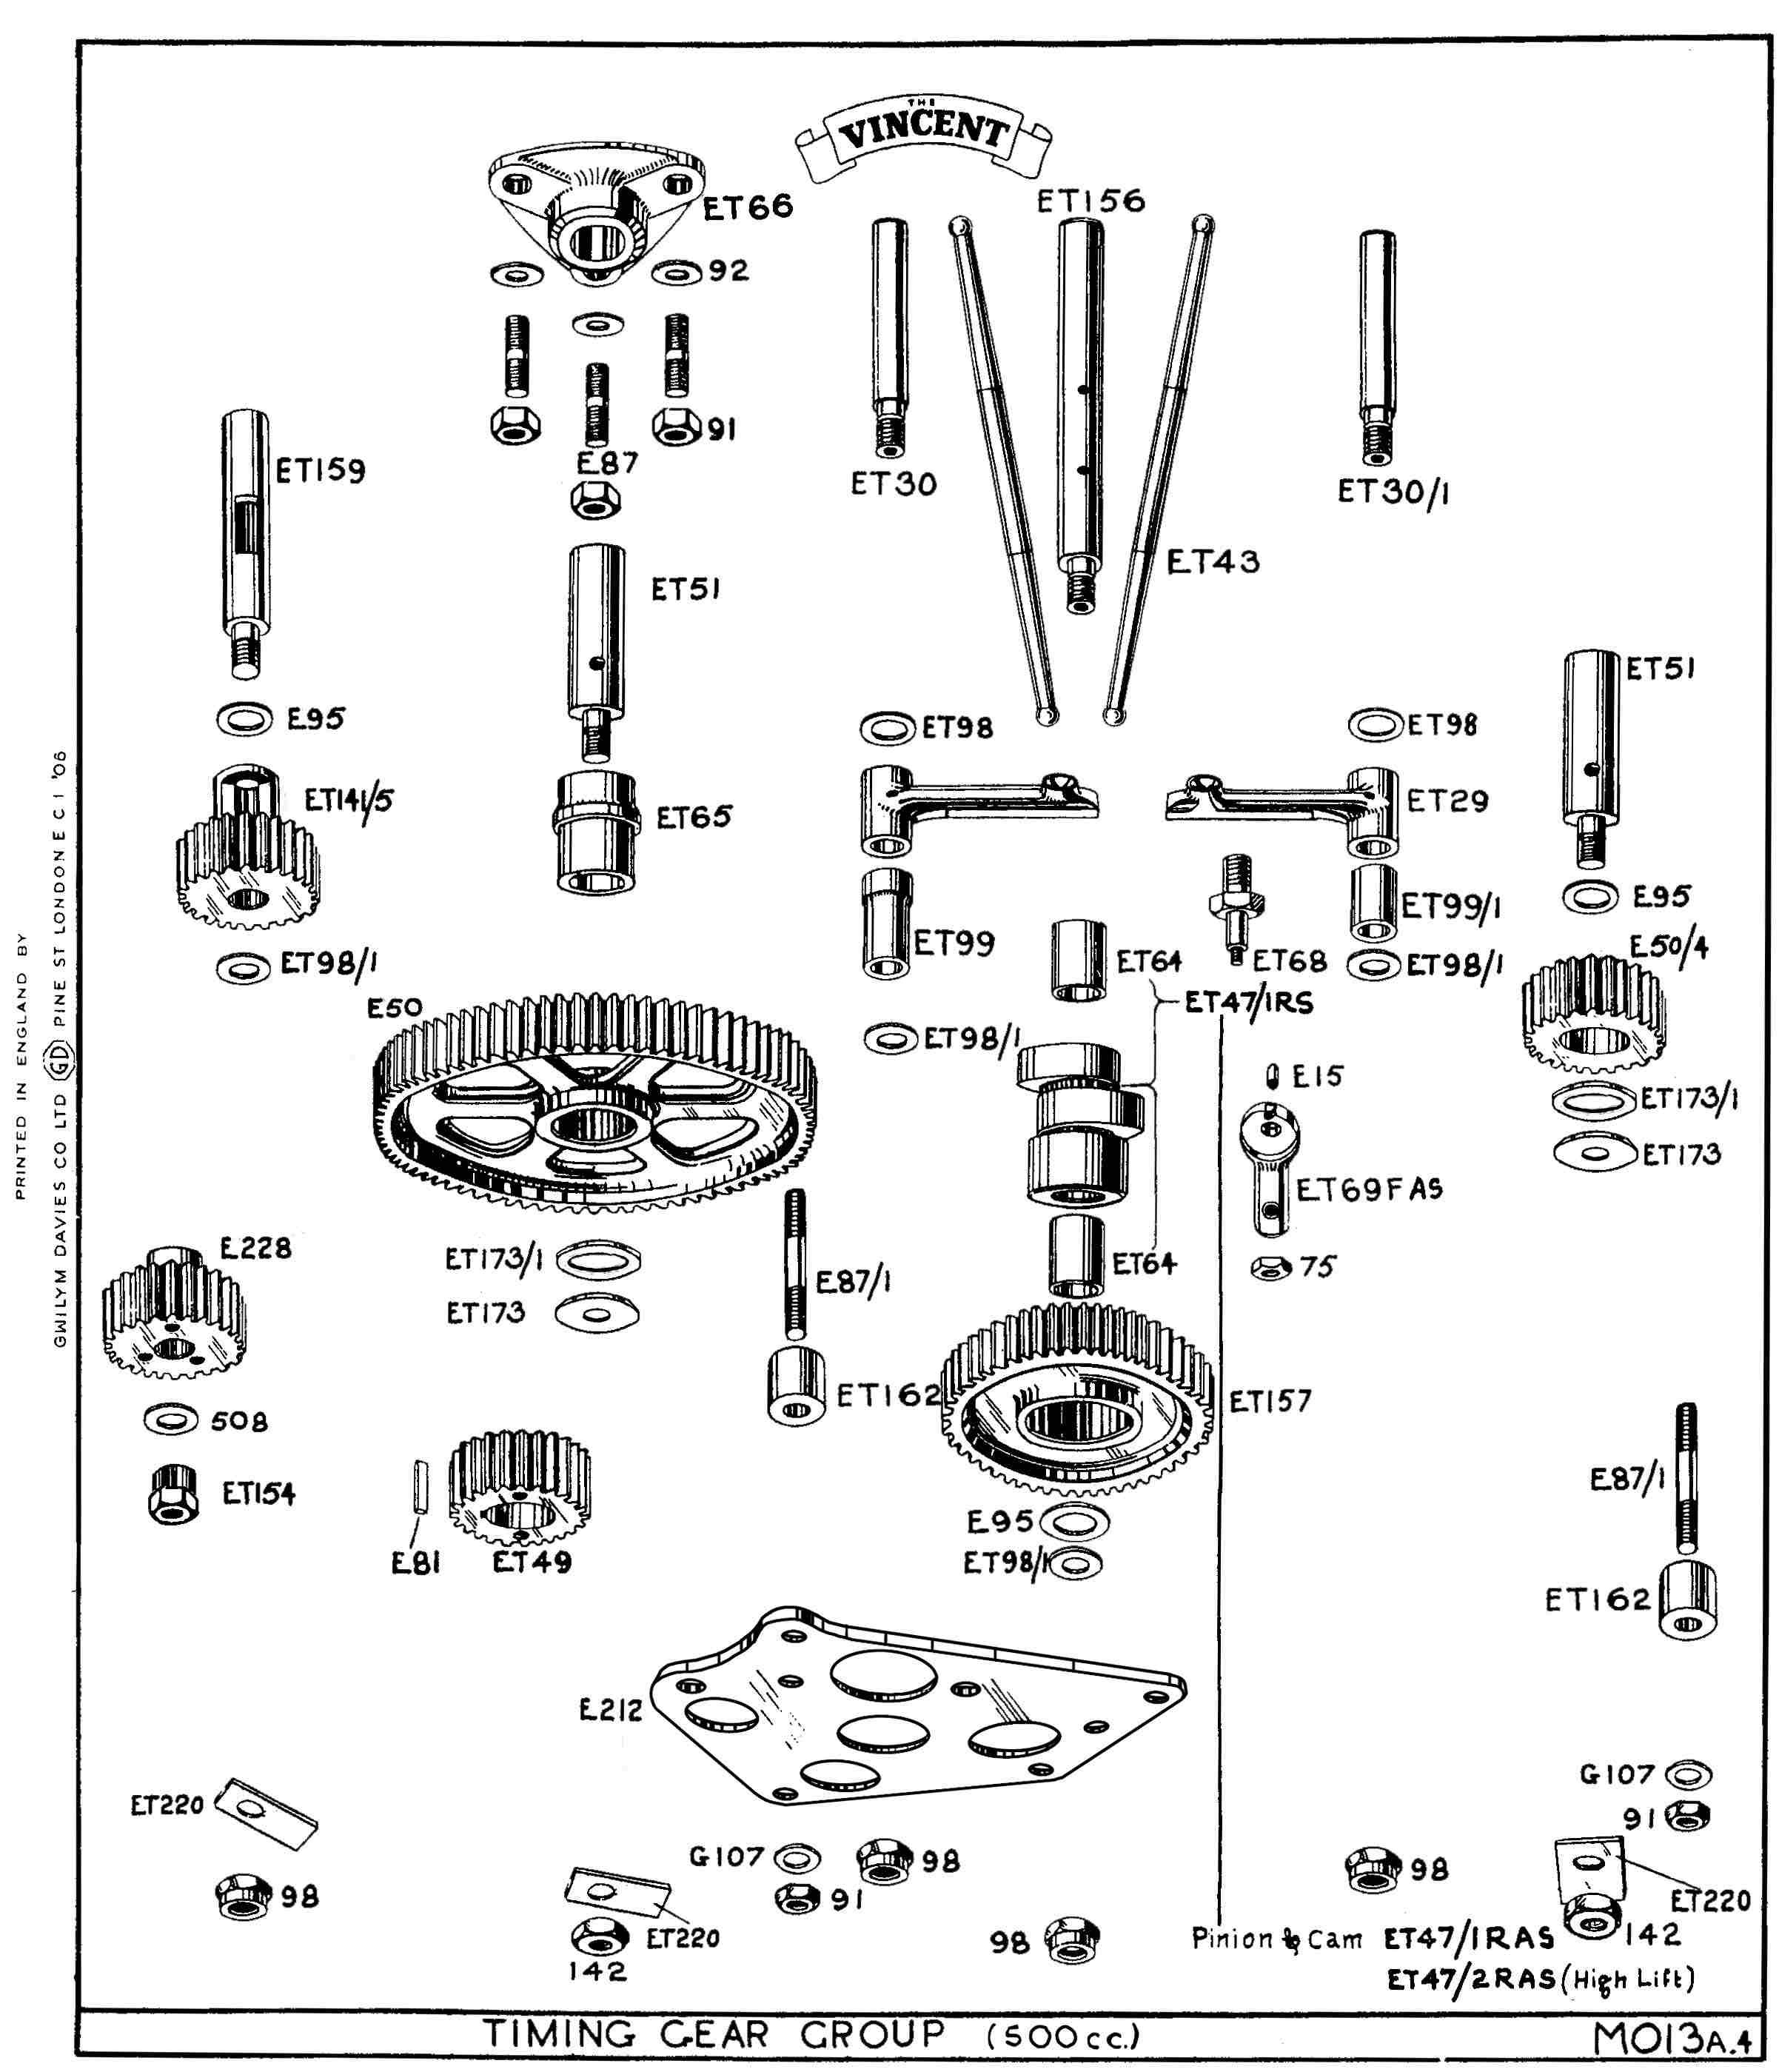 Car Engine Parts Names with Diagram Vincent Engine Technical Information Of Car Engine Parts Names with Diagram